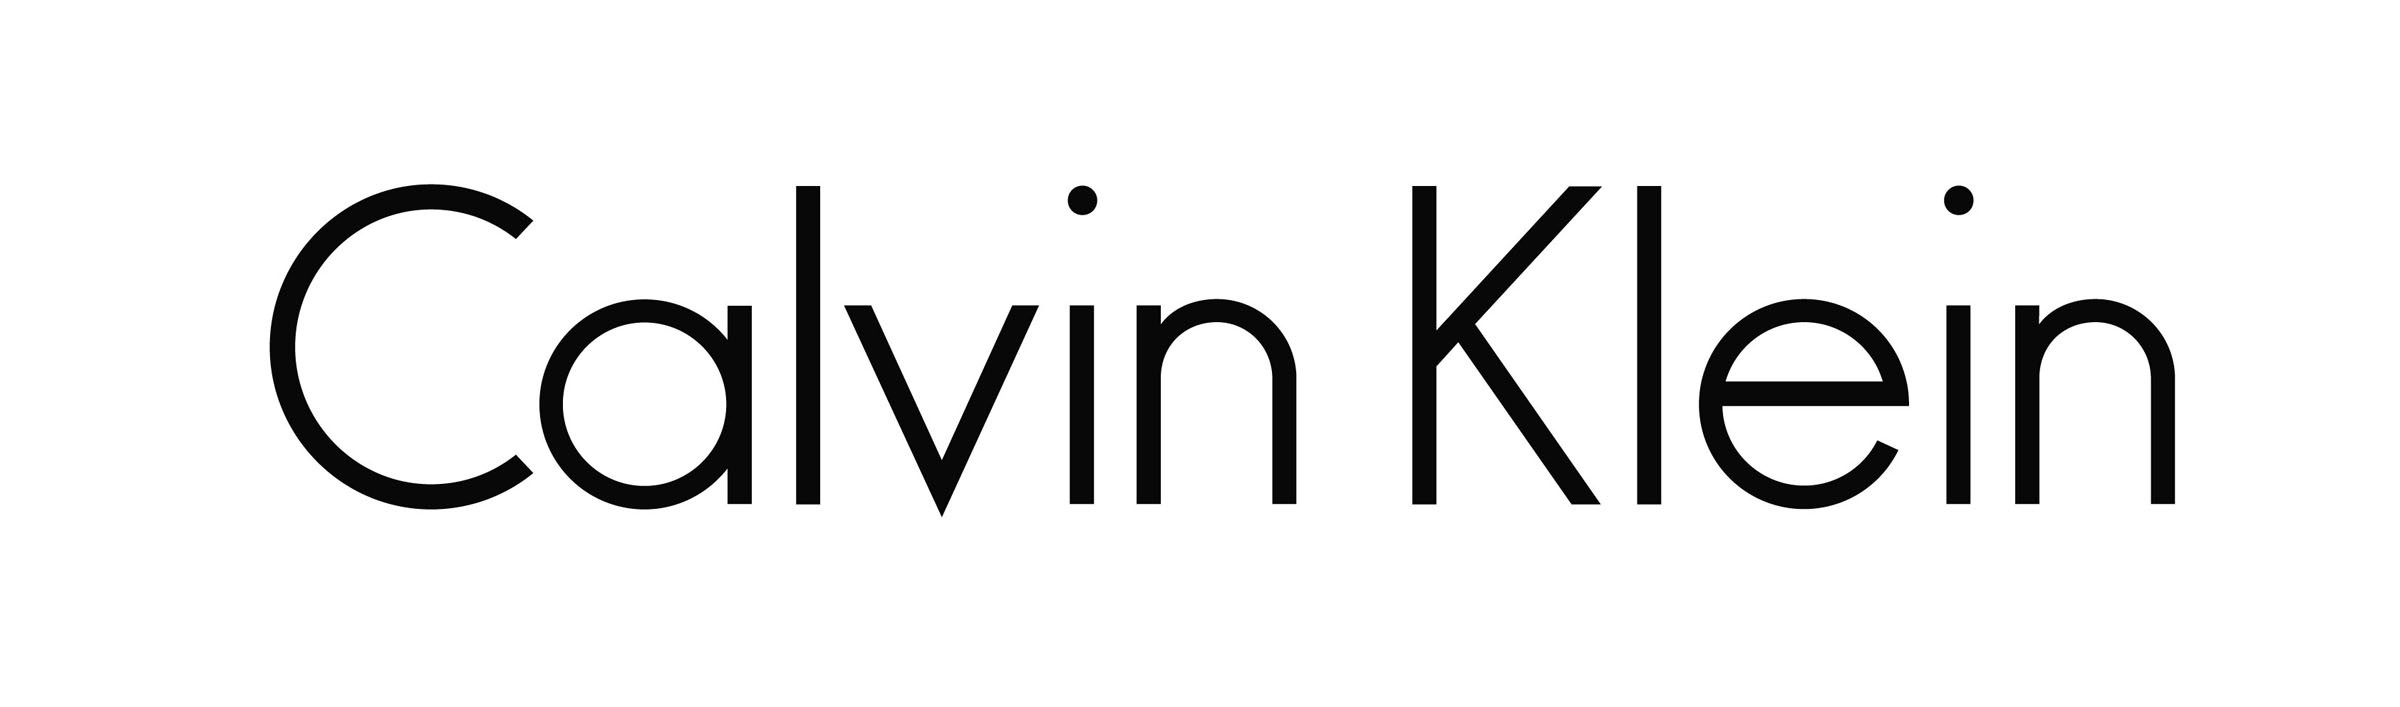 calvin-klein_logo-blk.jpg